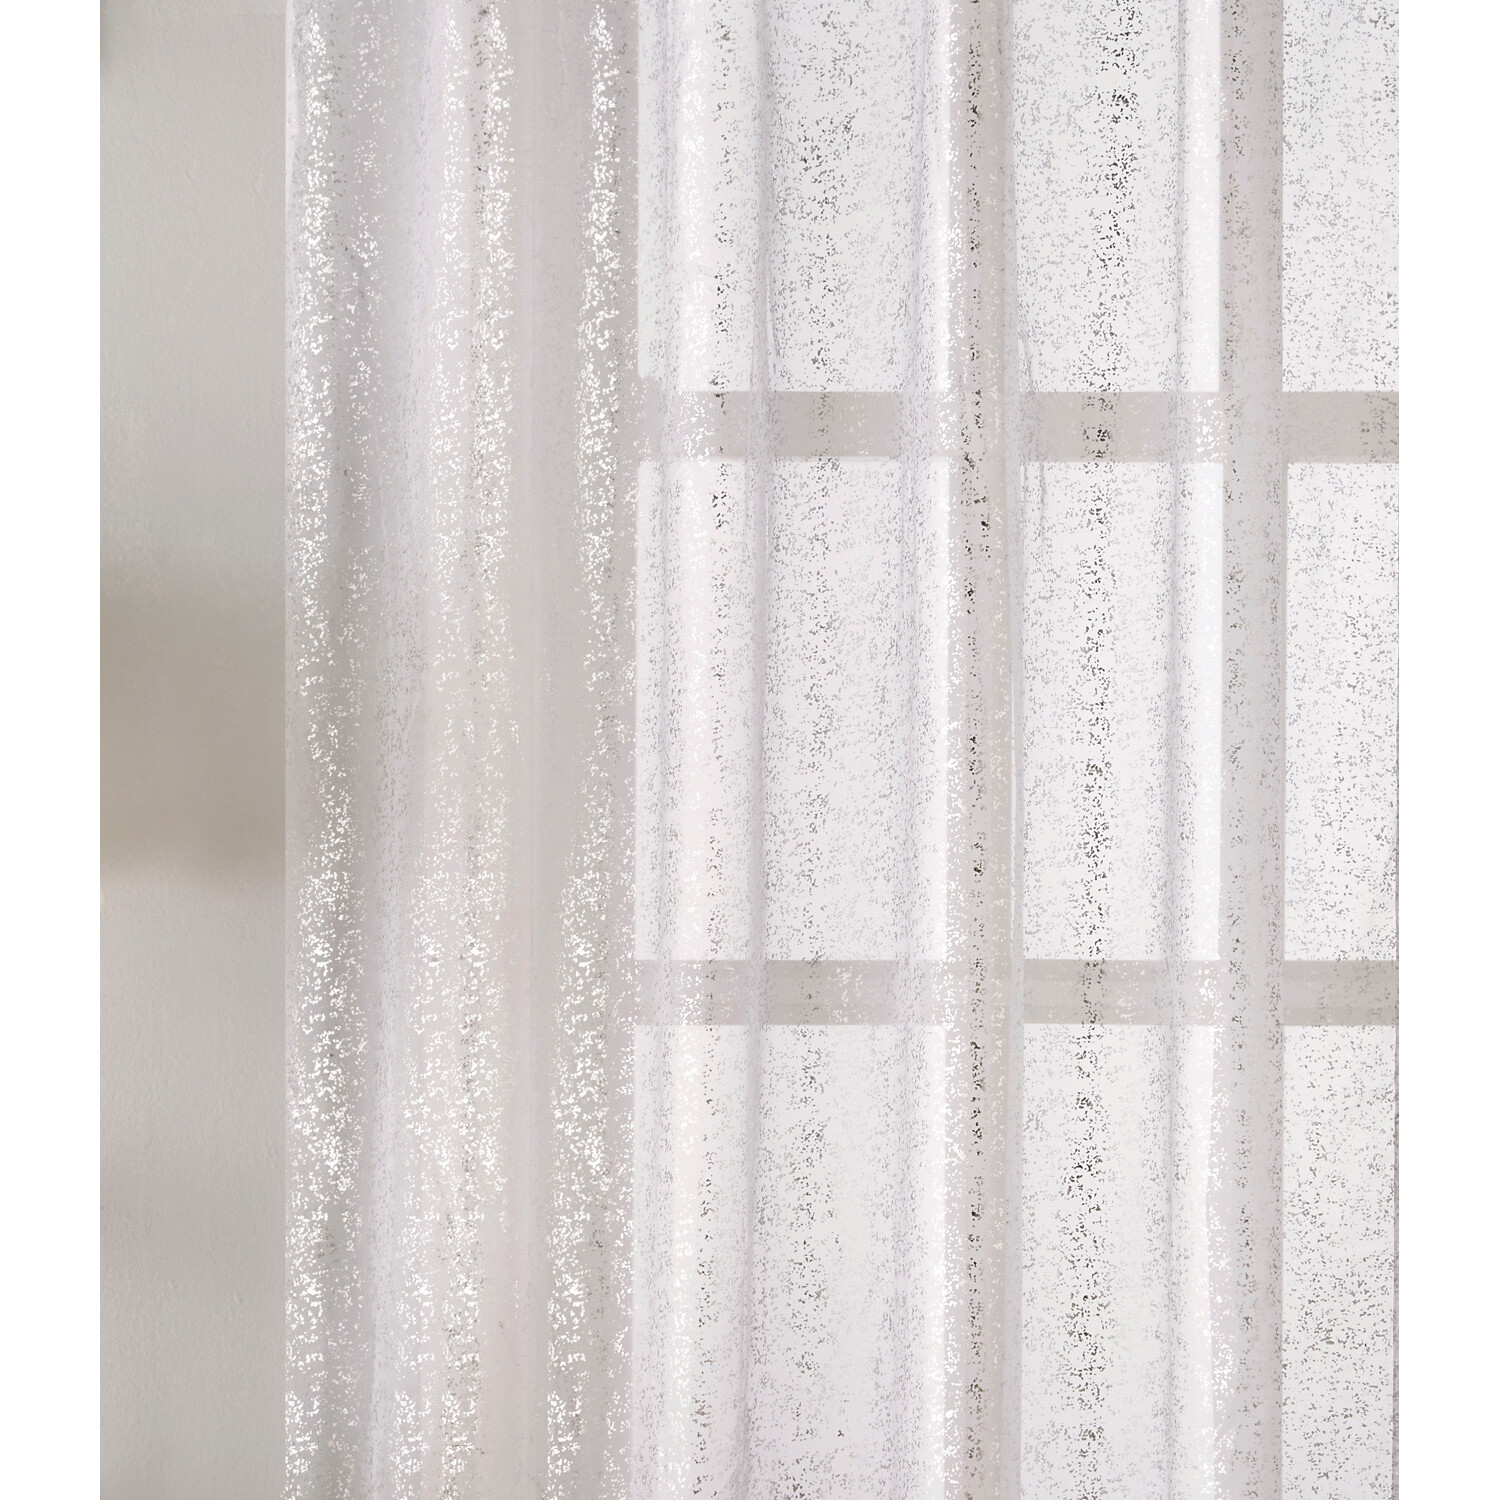 Pandora White Voile Panel 183 x 140cm Image 3